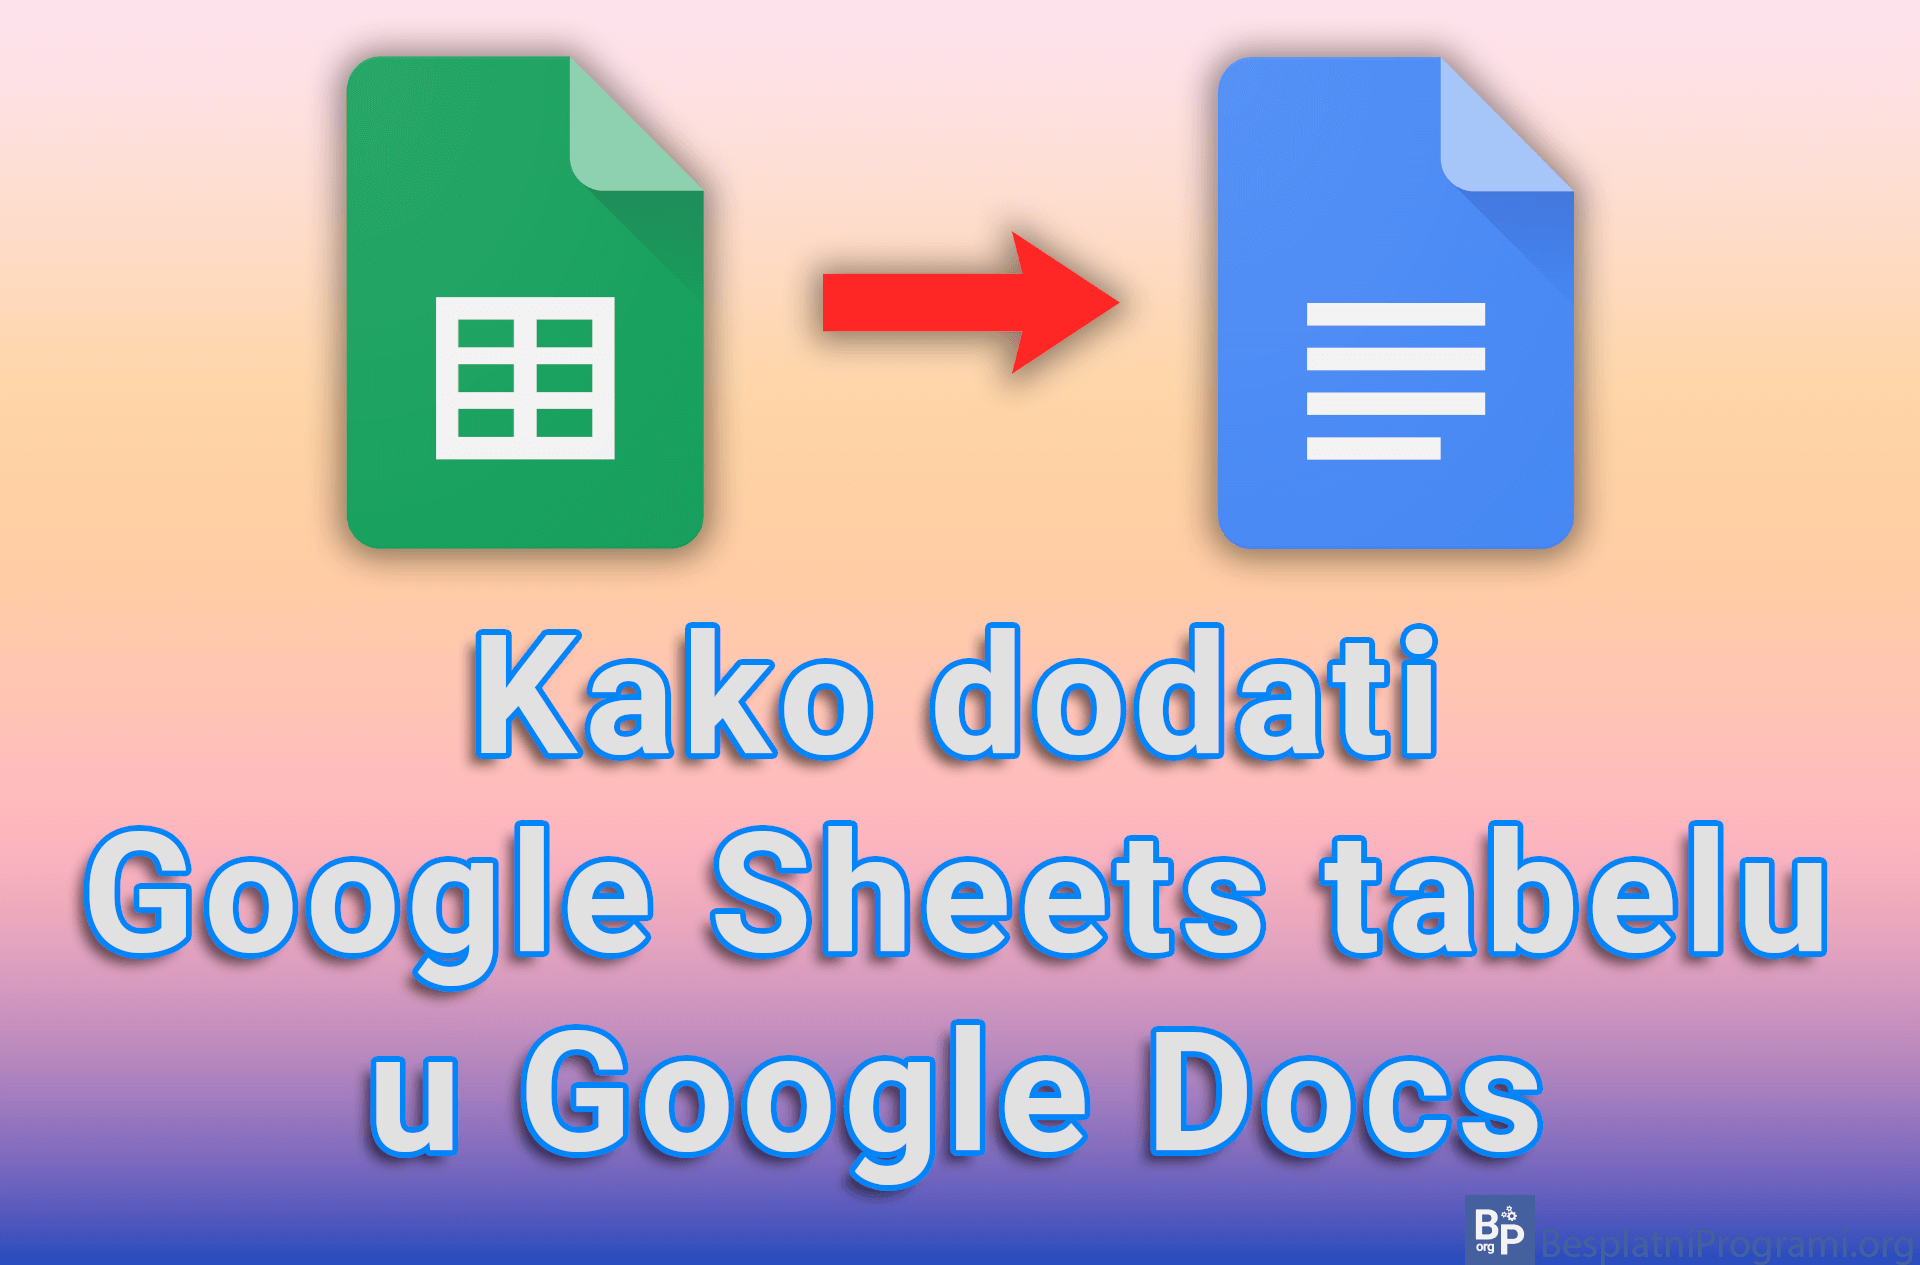 Kako dodati Google Sheets tabelu u Google Docs